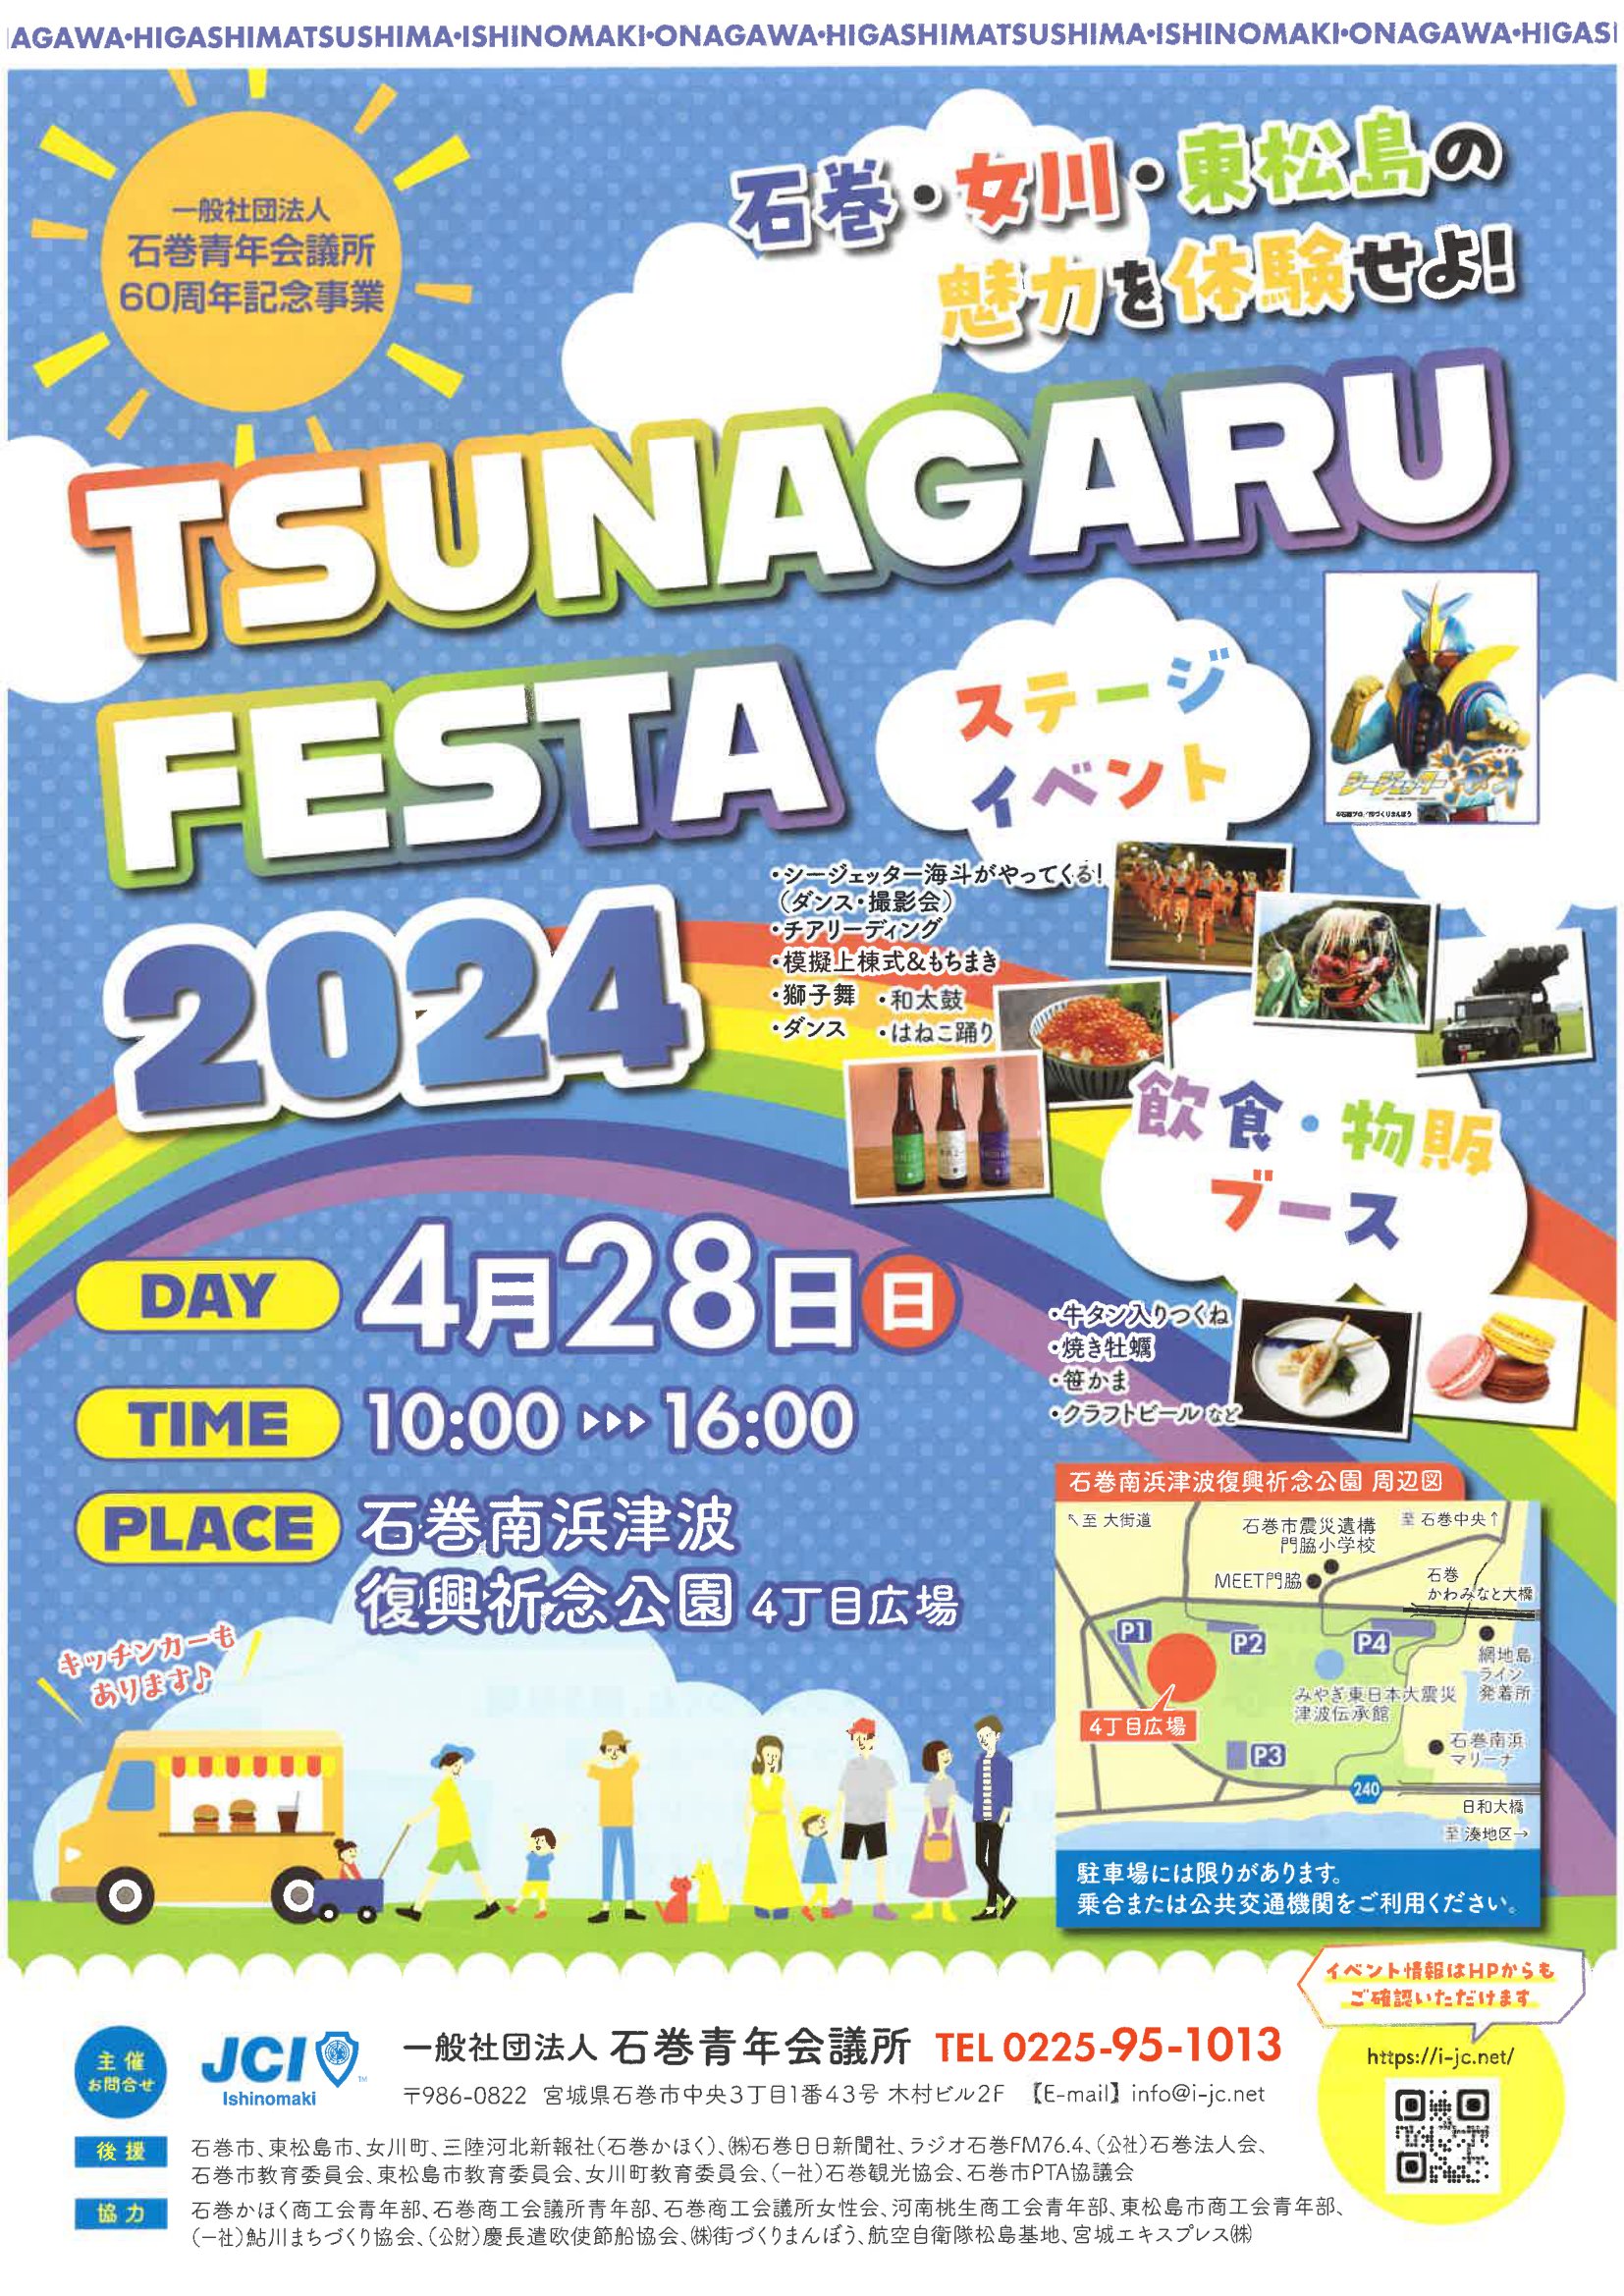 TSUNAGARU FESTA 2024 アイキャッチ画像